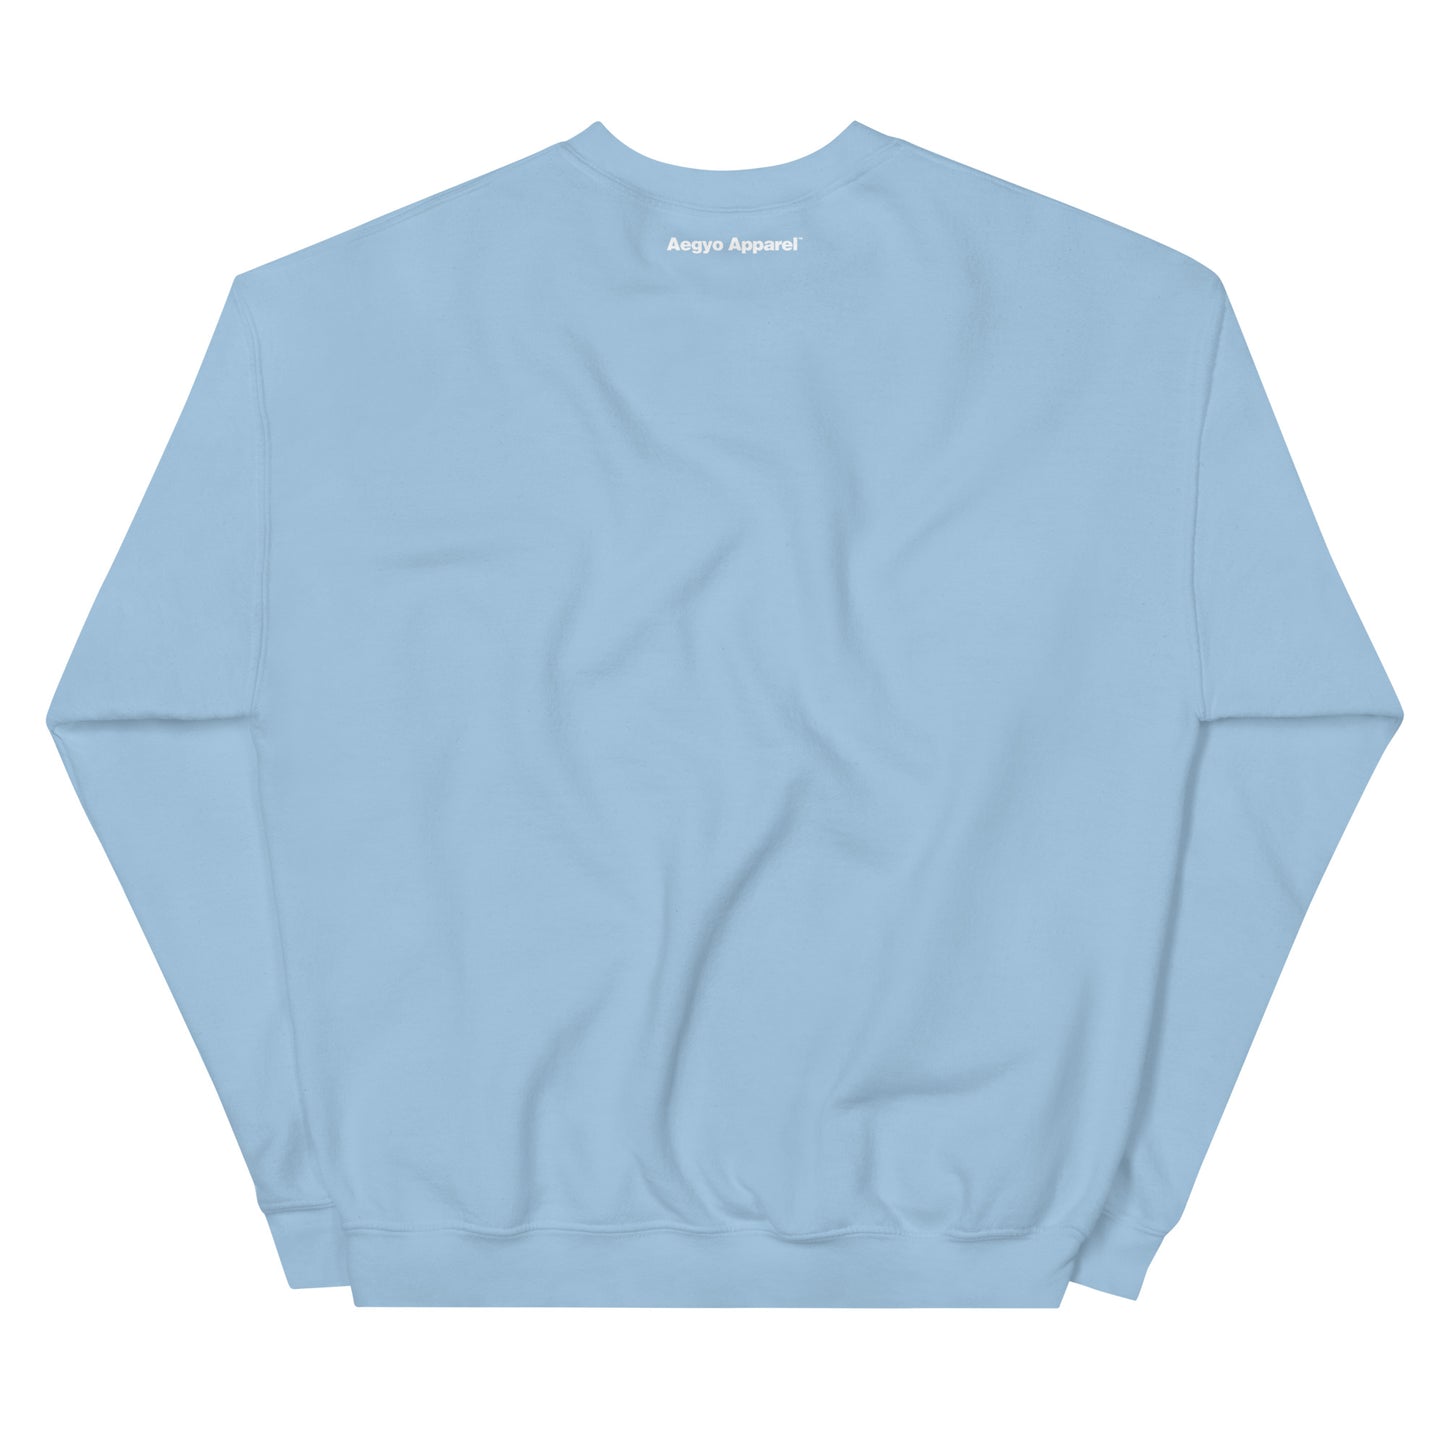 newjeans inspired sweatshirt new jeans tourist sweatshirt kpop merch sweater touristcore aegyo apparel